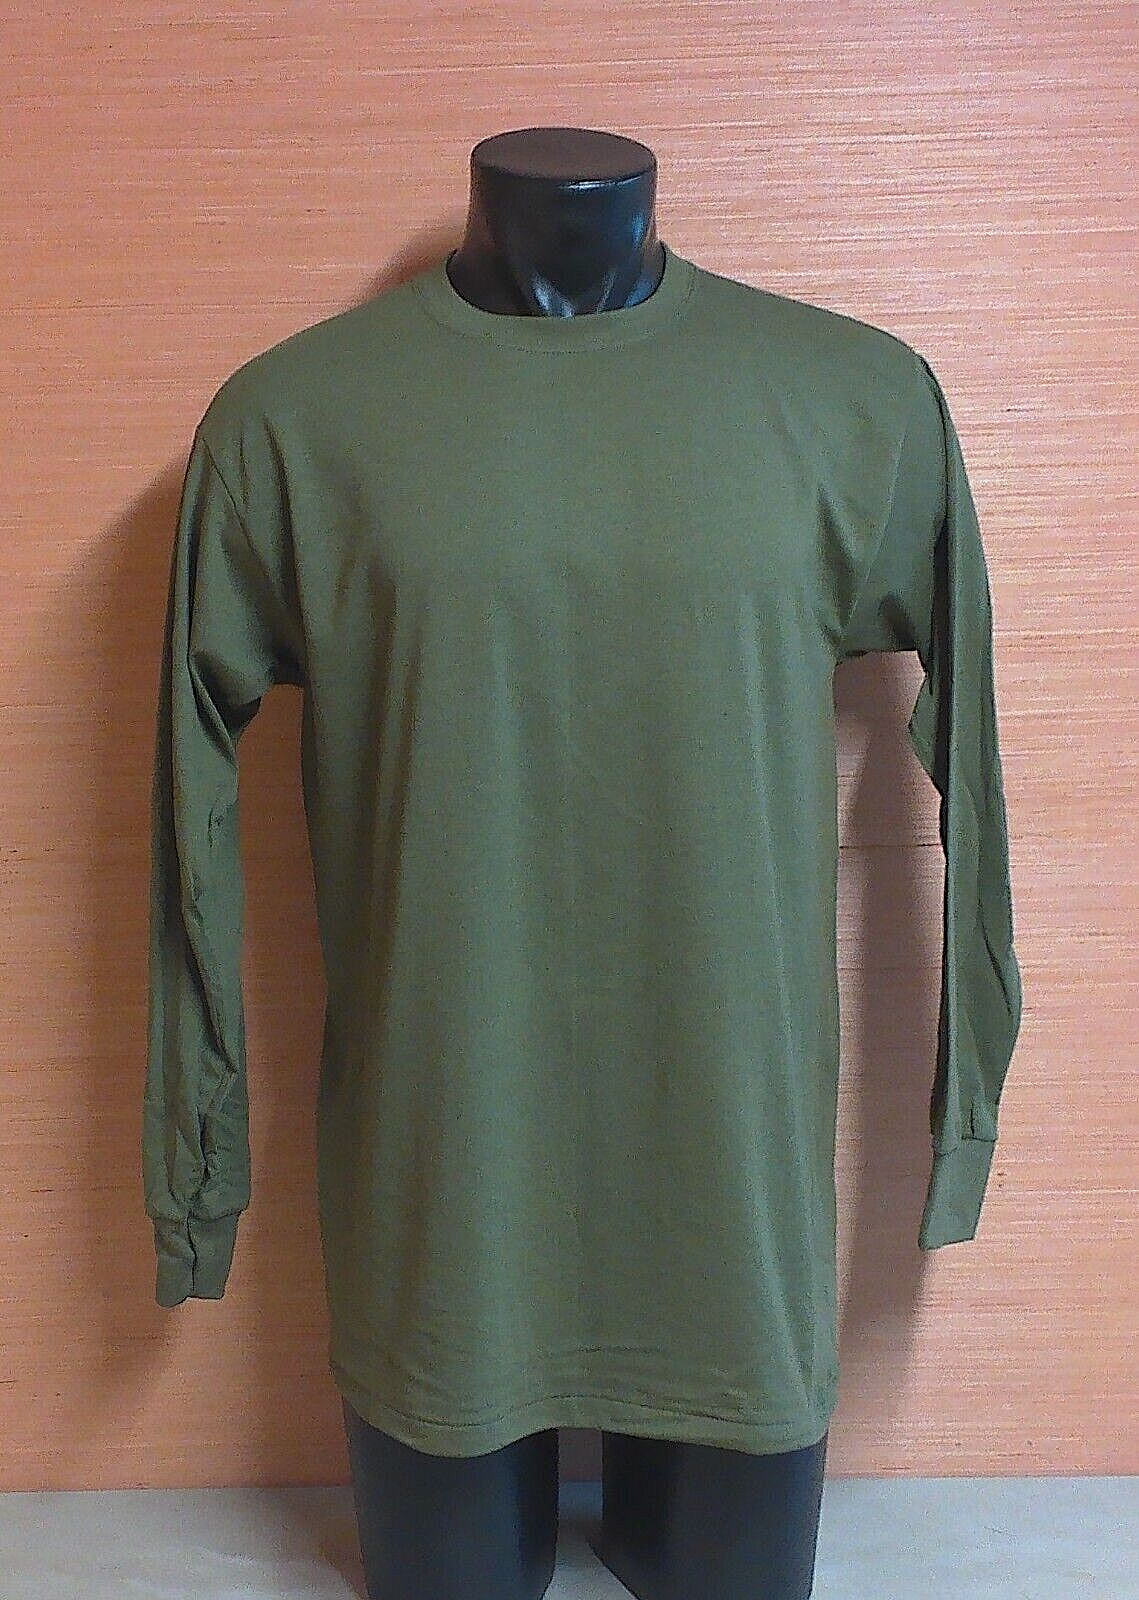 2 Pack of US Military Issue Dri-Duke OD Green Long Sleeve Uniform T-Shirts Large